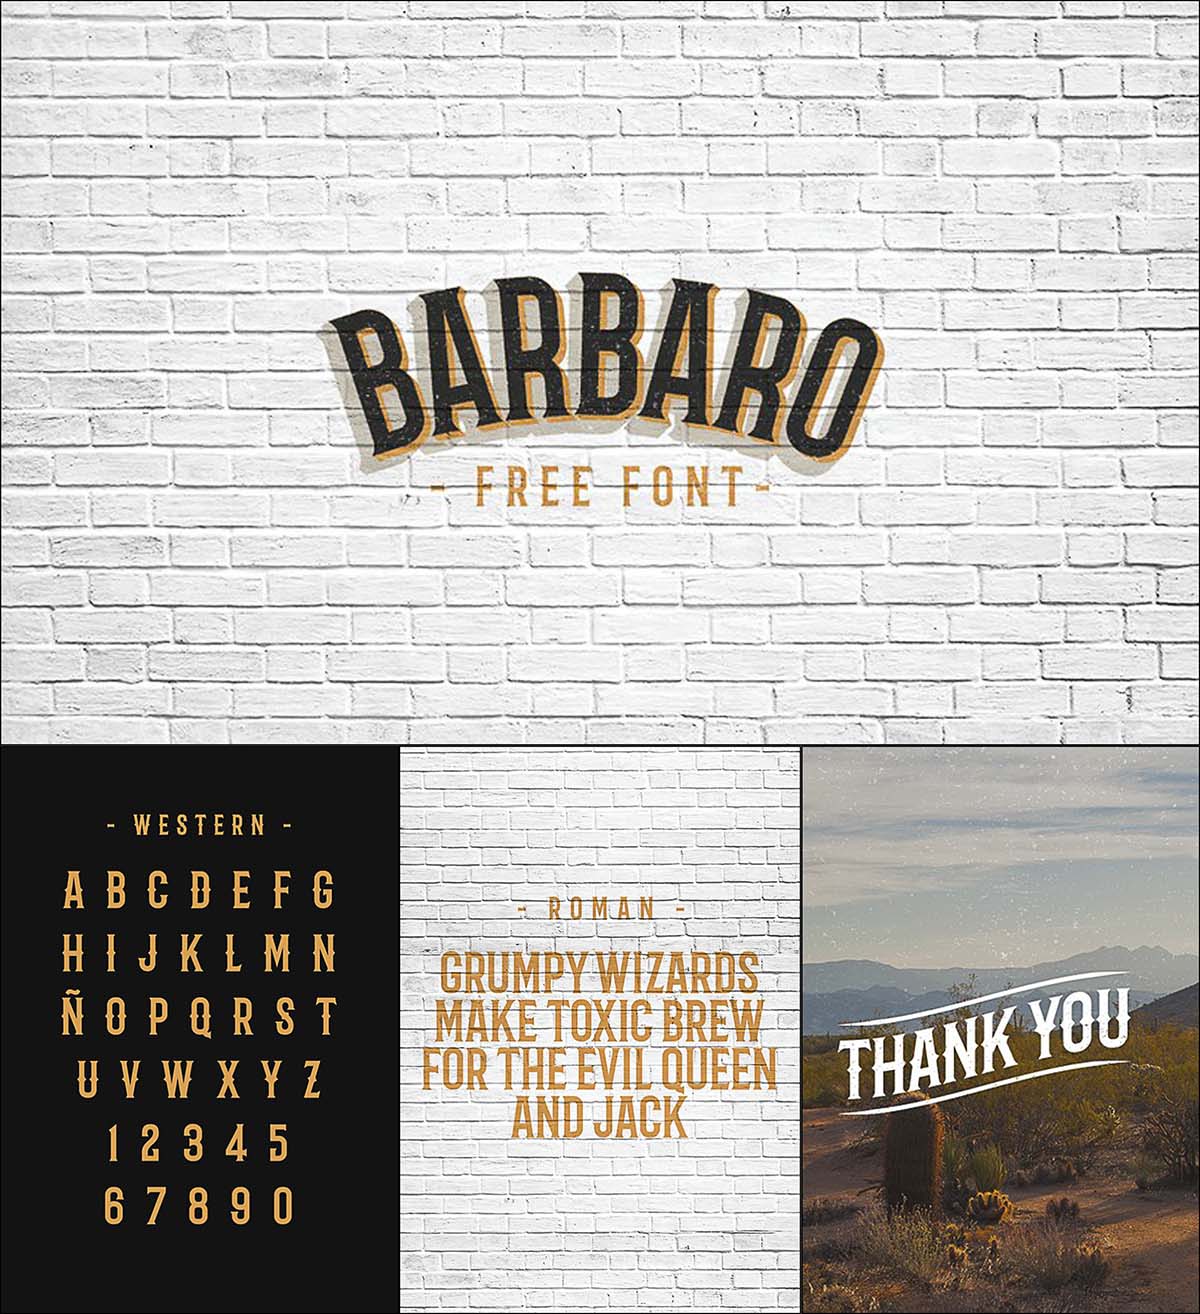 Barbaro free retro font